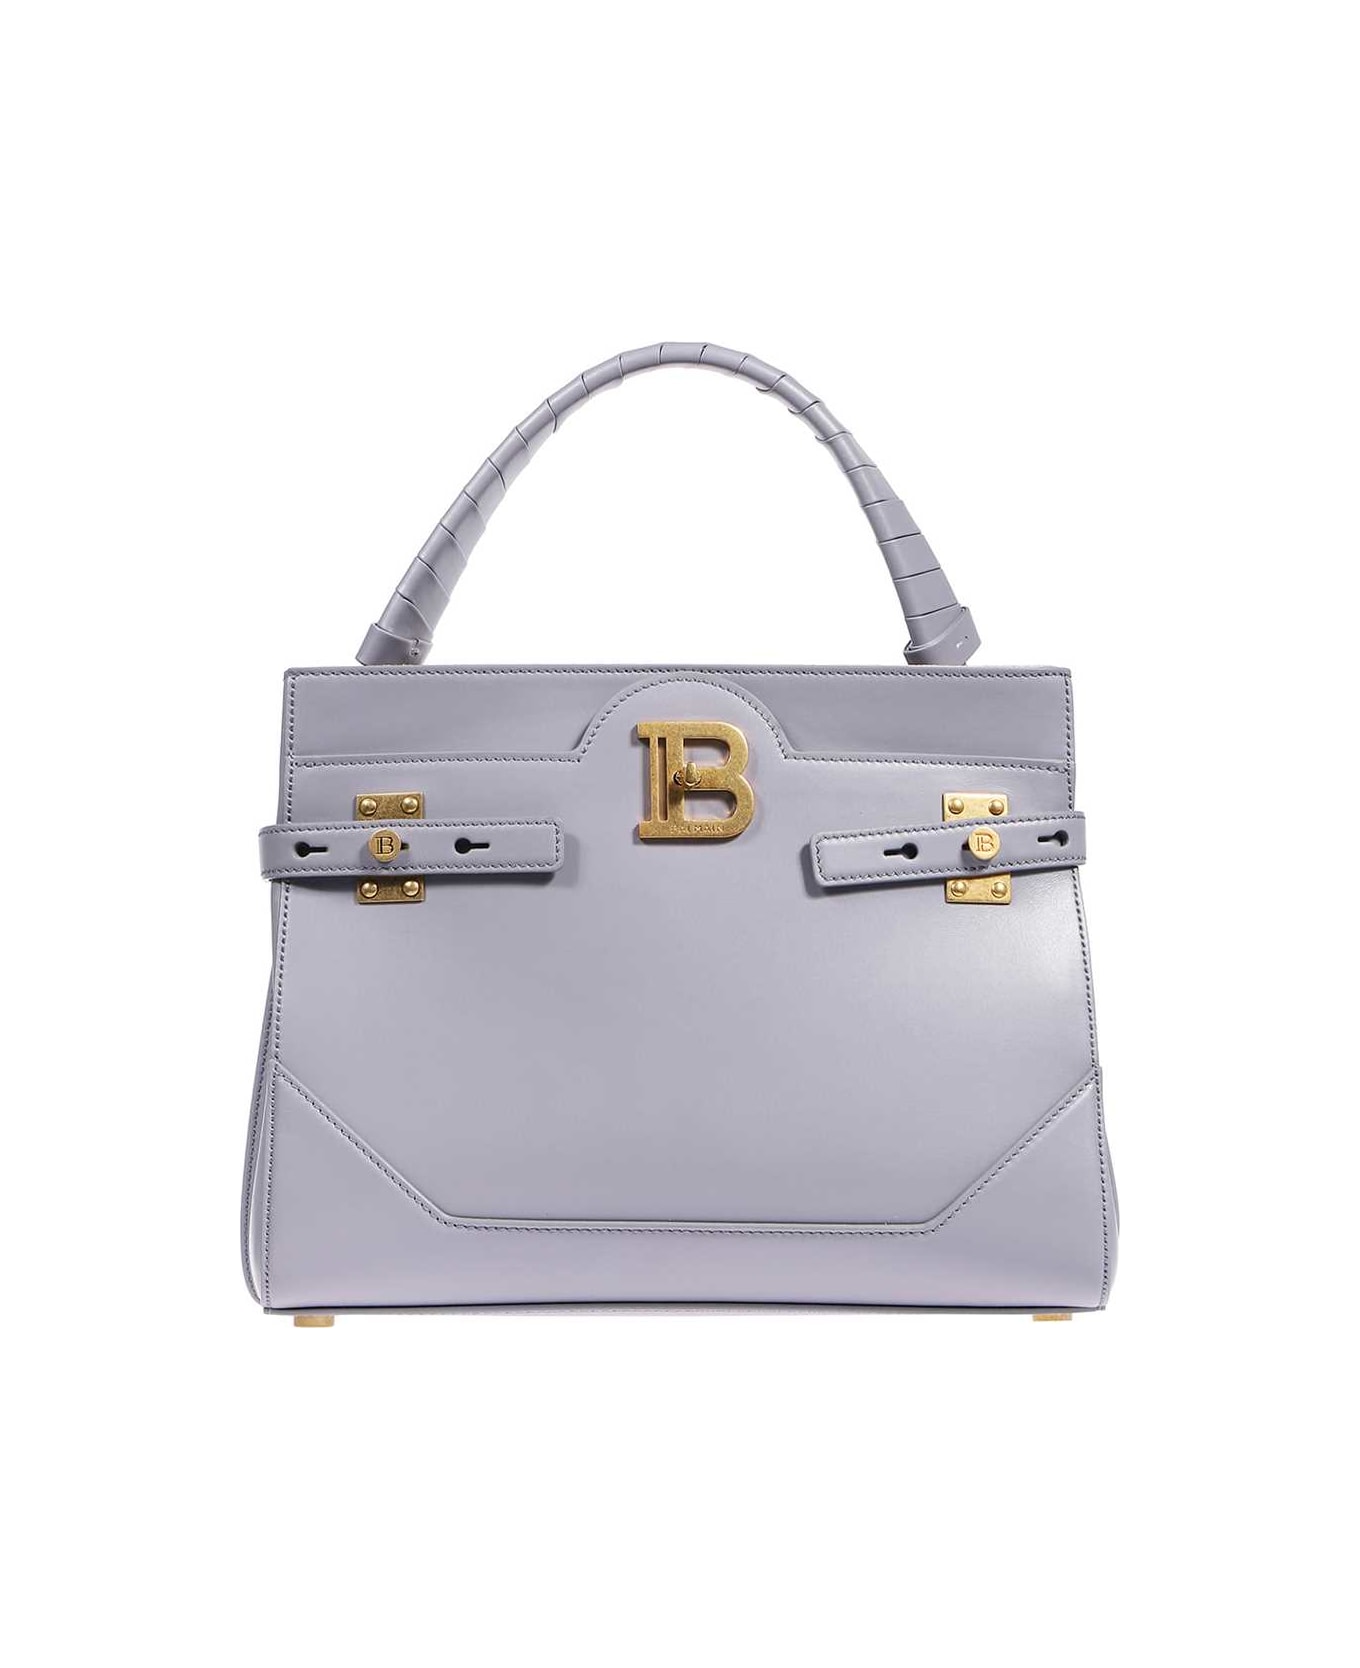 Balmain Leather Handbag - grey